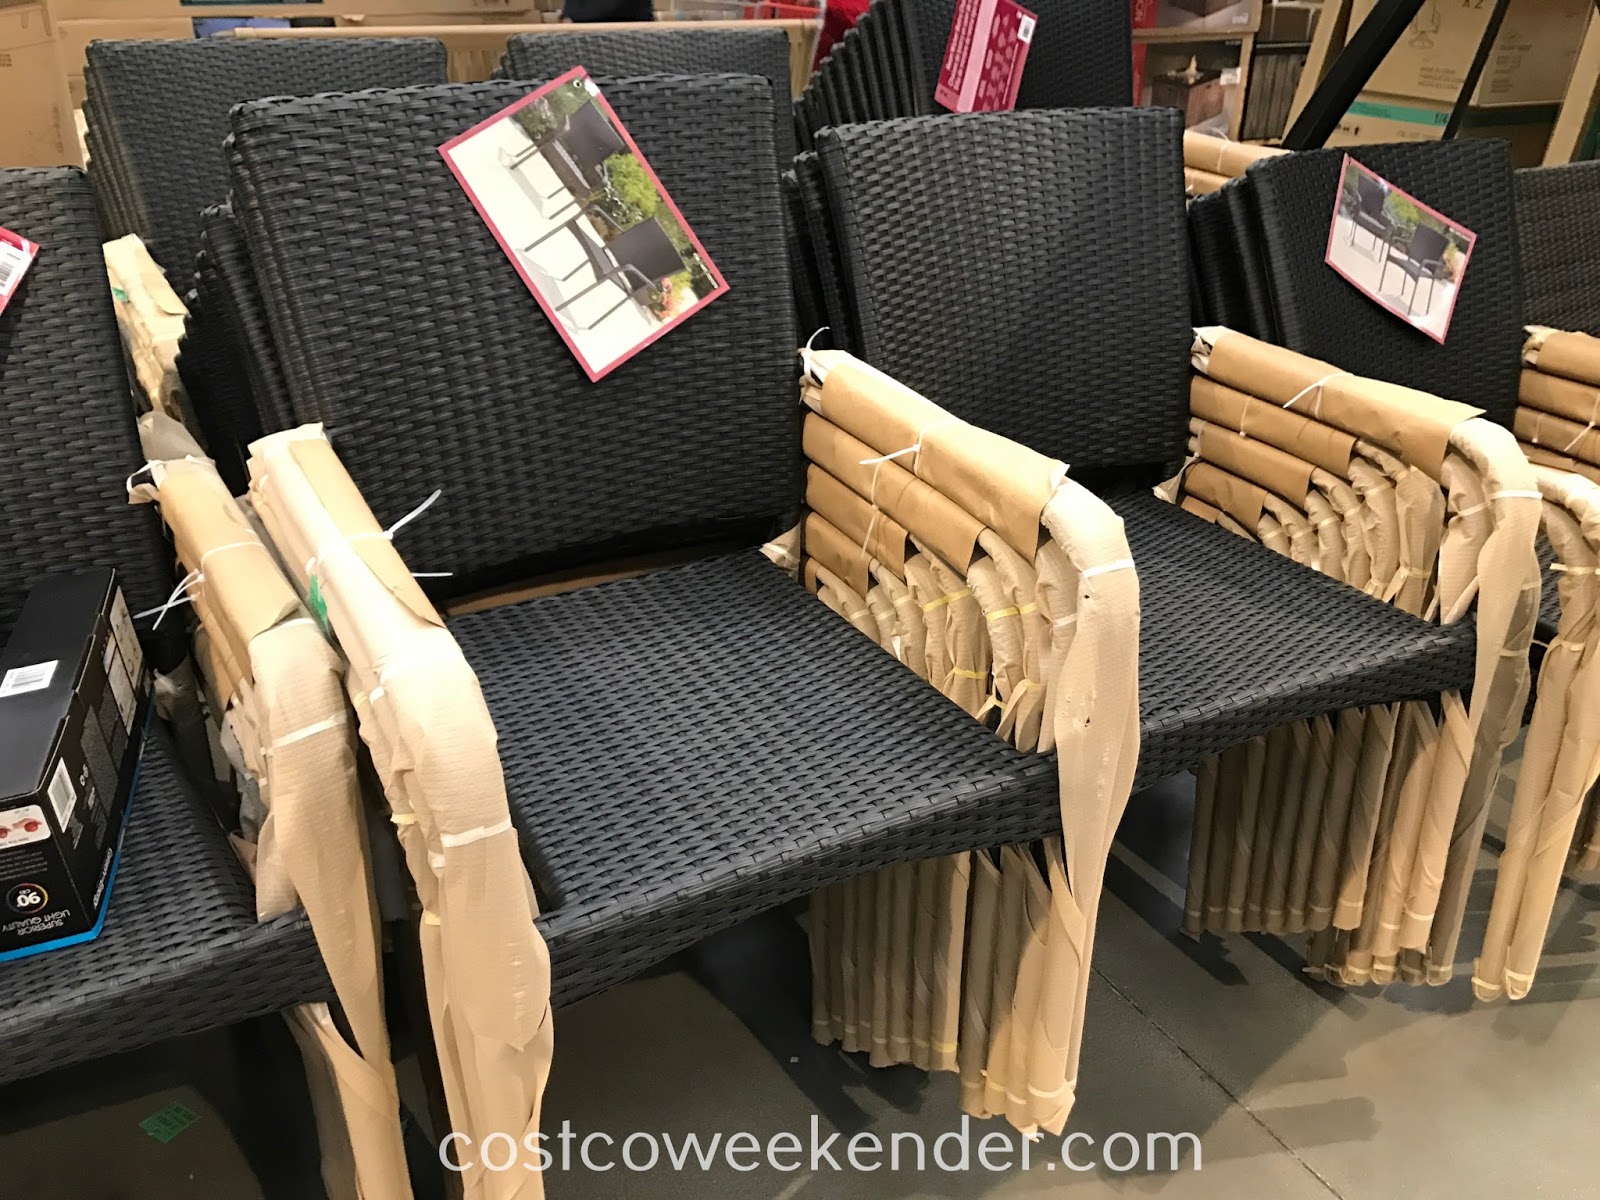 Woven Resin Wicker Bistro Chairs Set Of 2 Costco Weekender